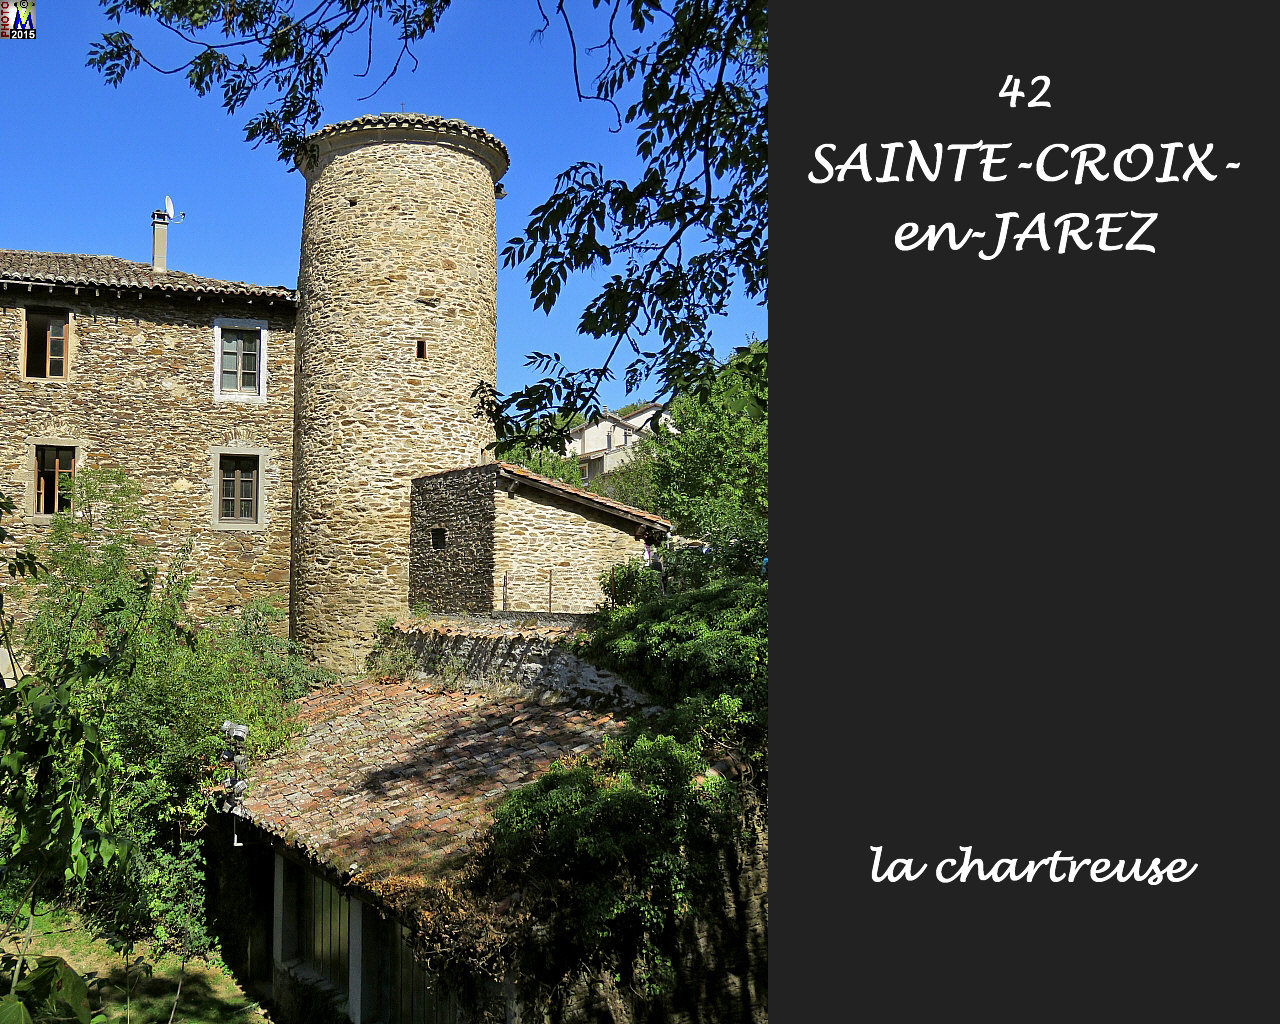 42SteCROIX-JAREZ_chartreuse_124.jpg